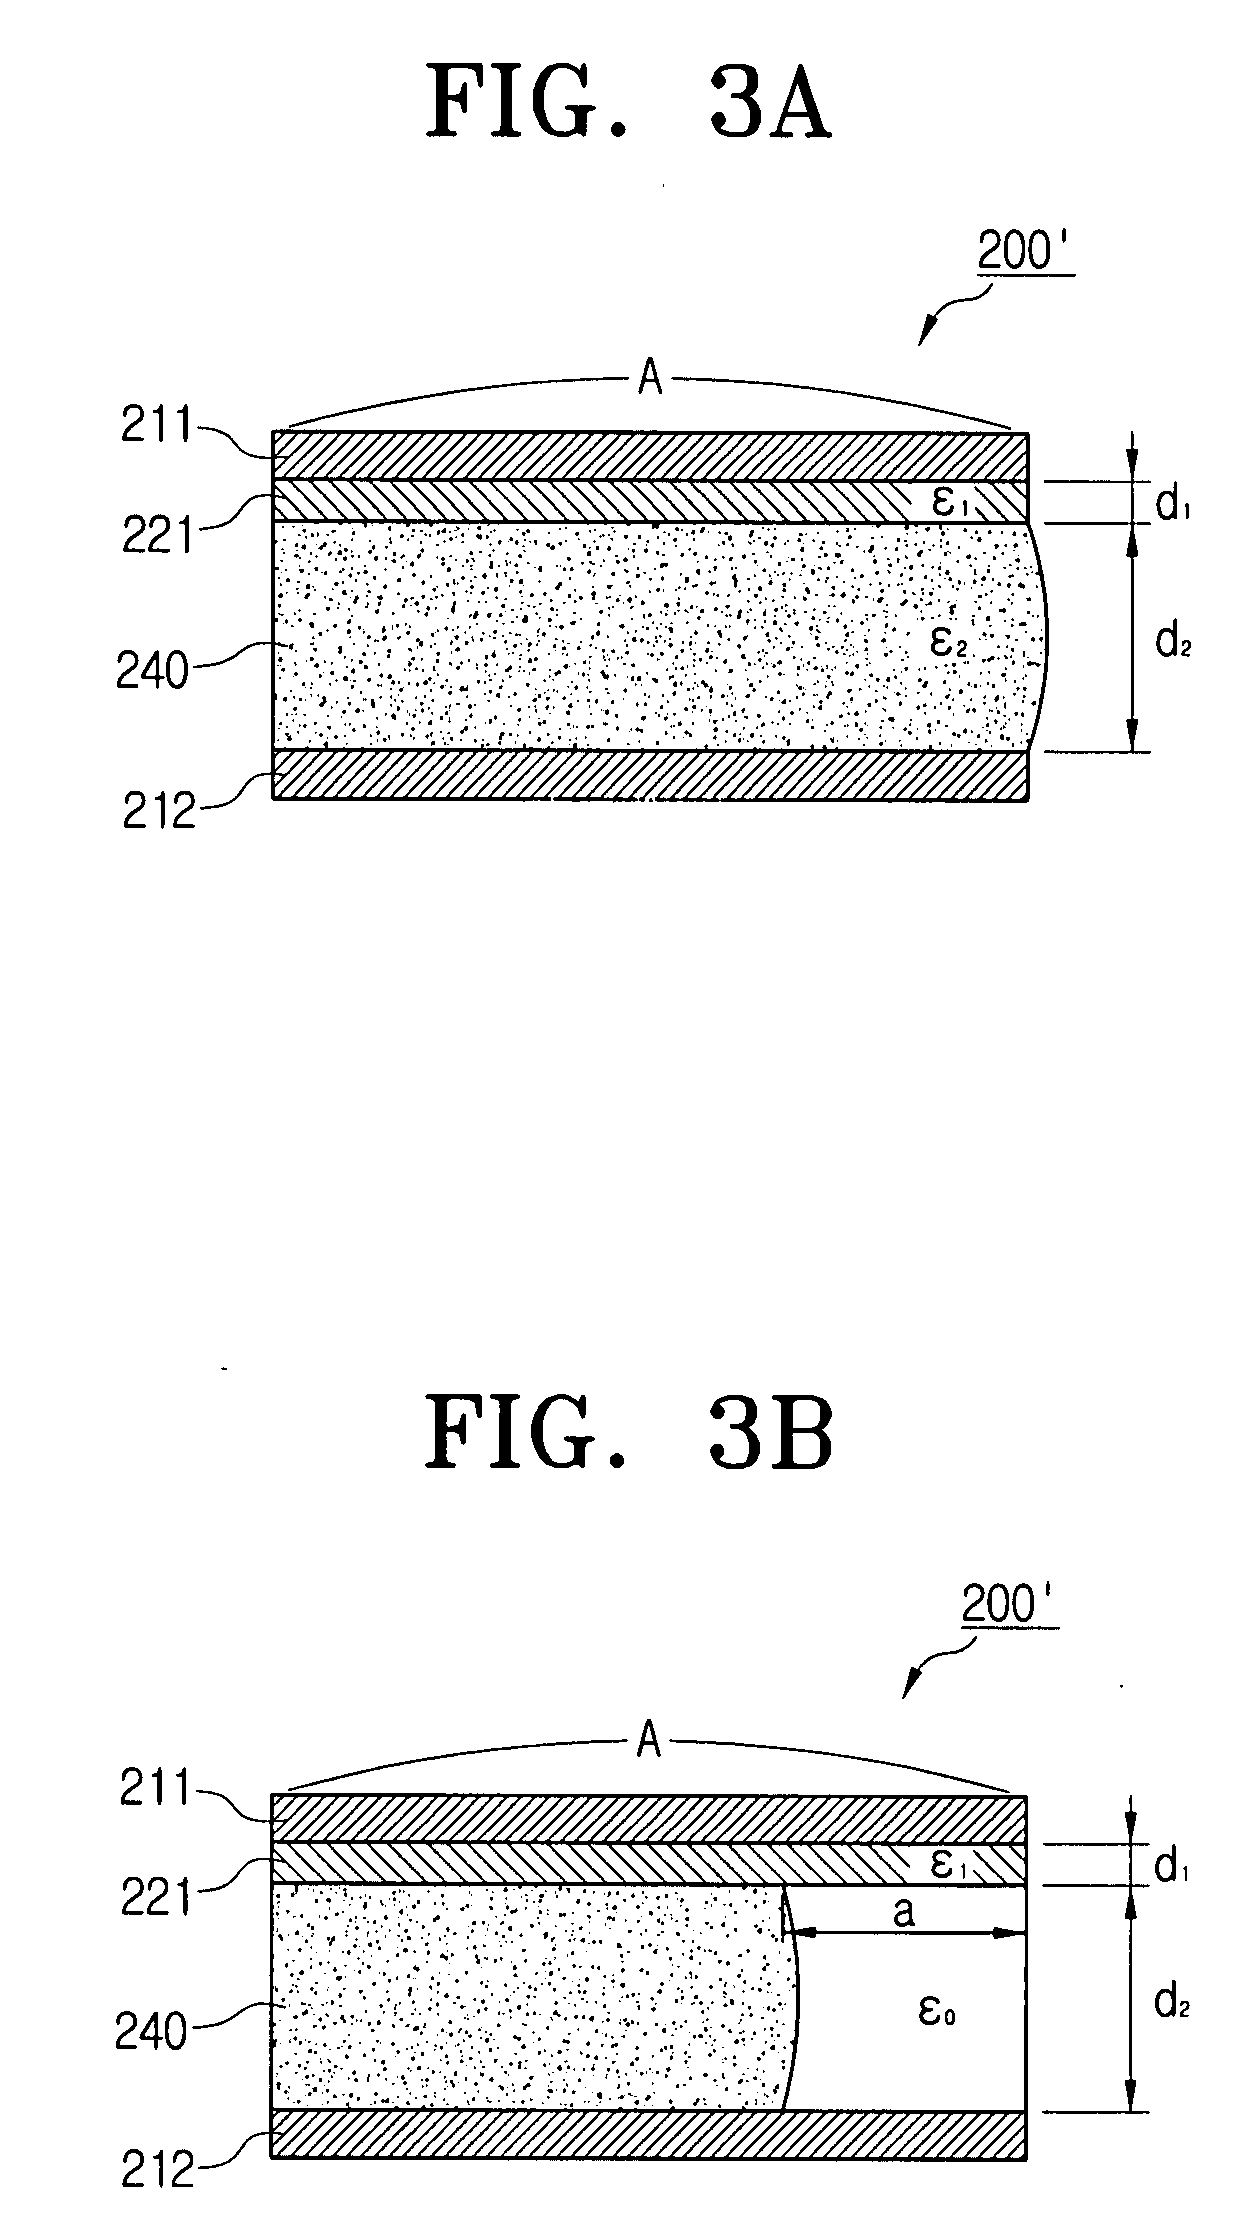 Tunable capacitor using electrowetting phenomenon